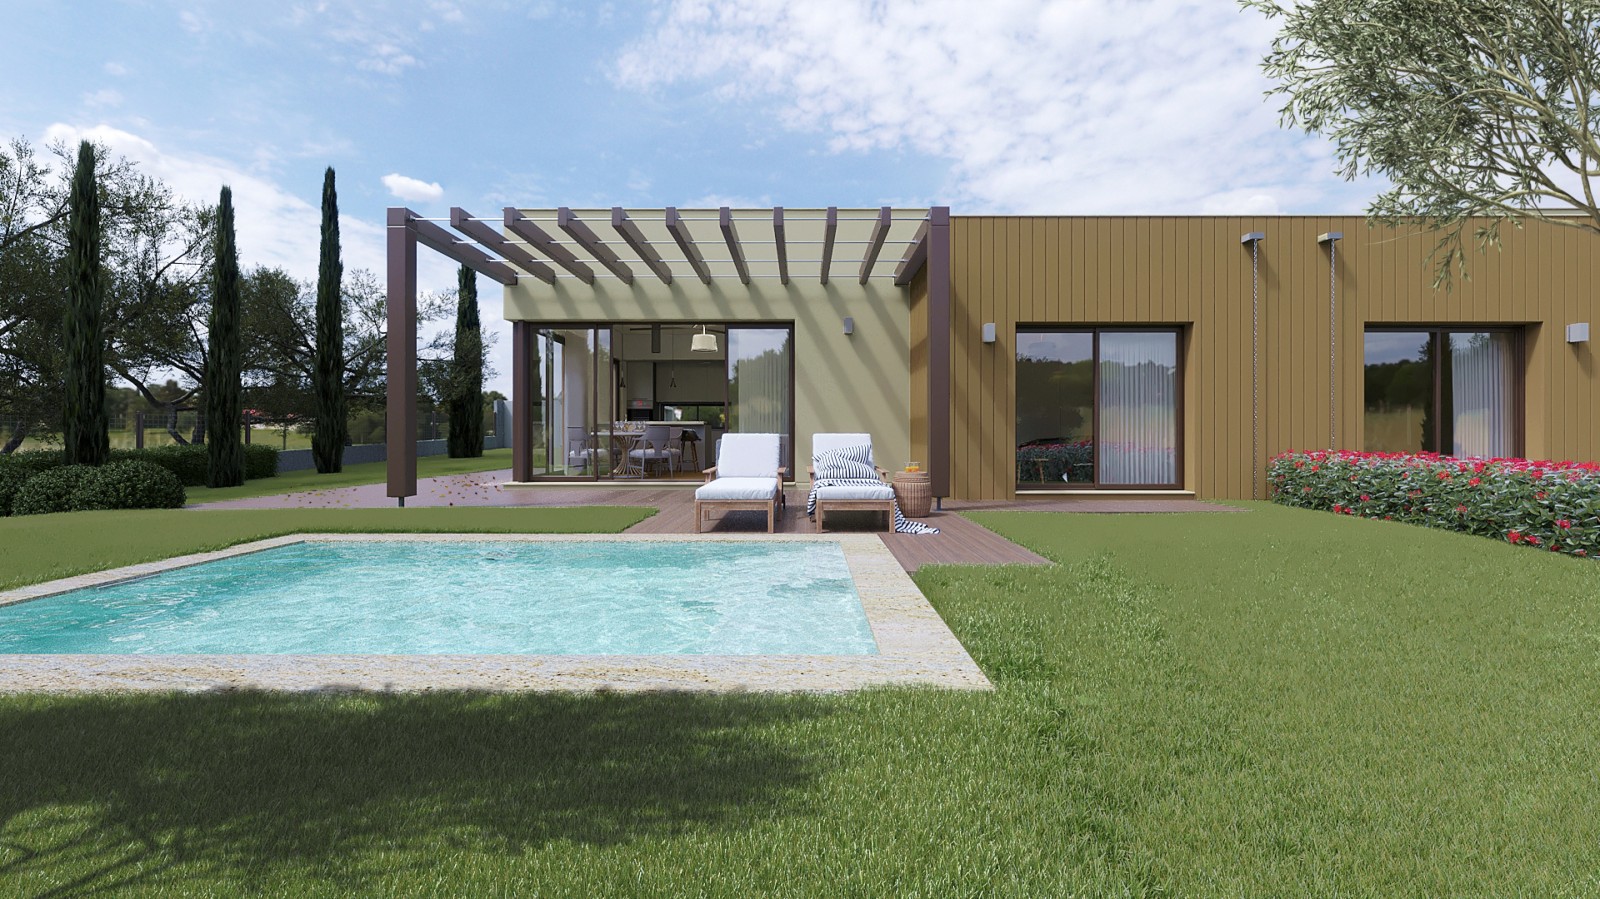 2 bedroom semi-detached villa with swimming pool for sale in Golf resort, Algarve_218693